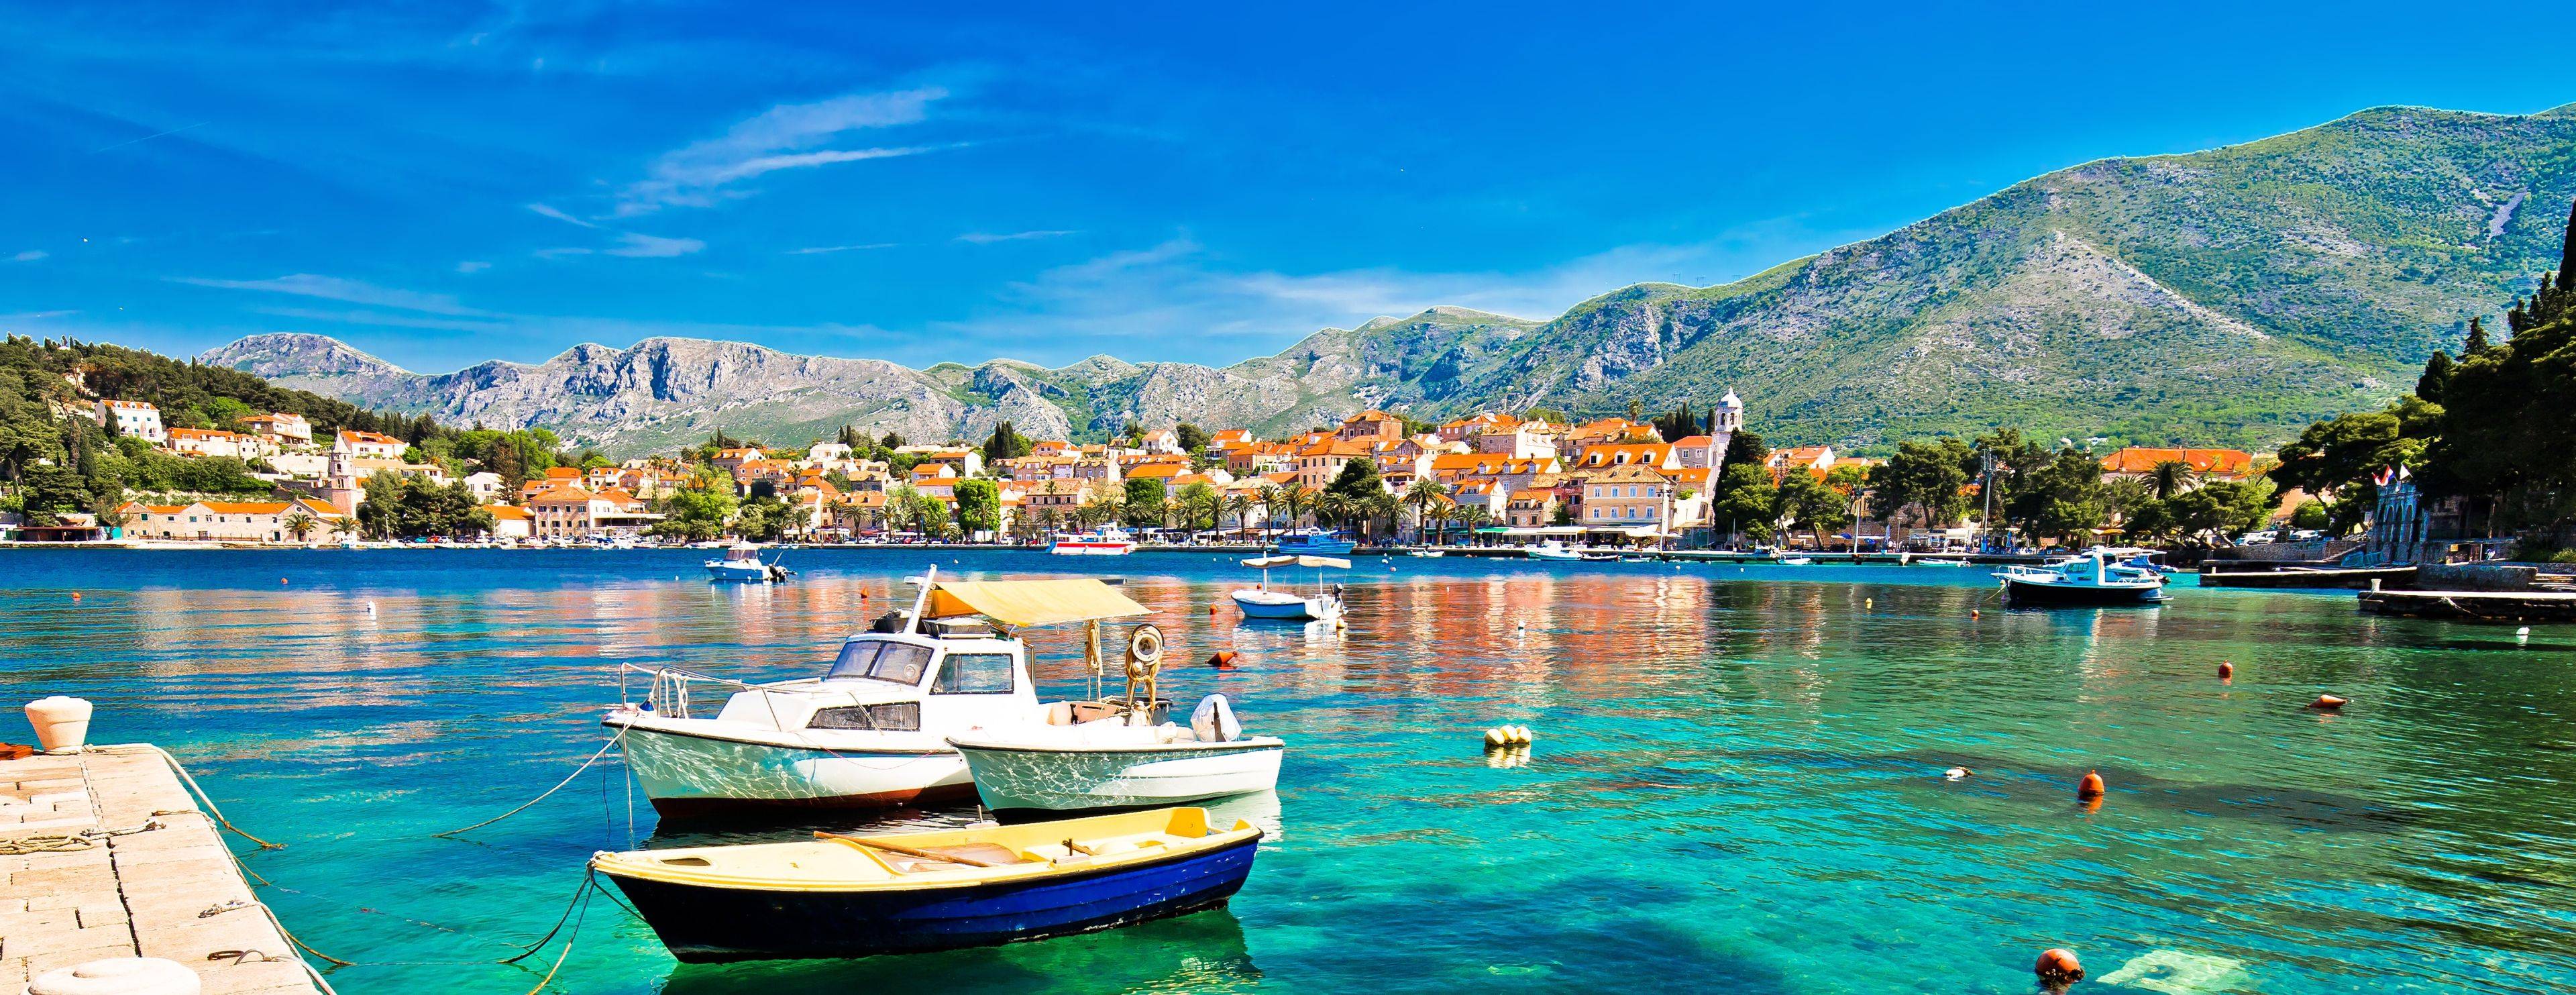 Visite de Dubrovnik, la perle de l'Adriatique